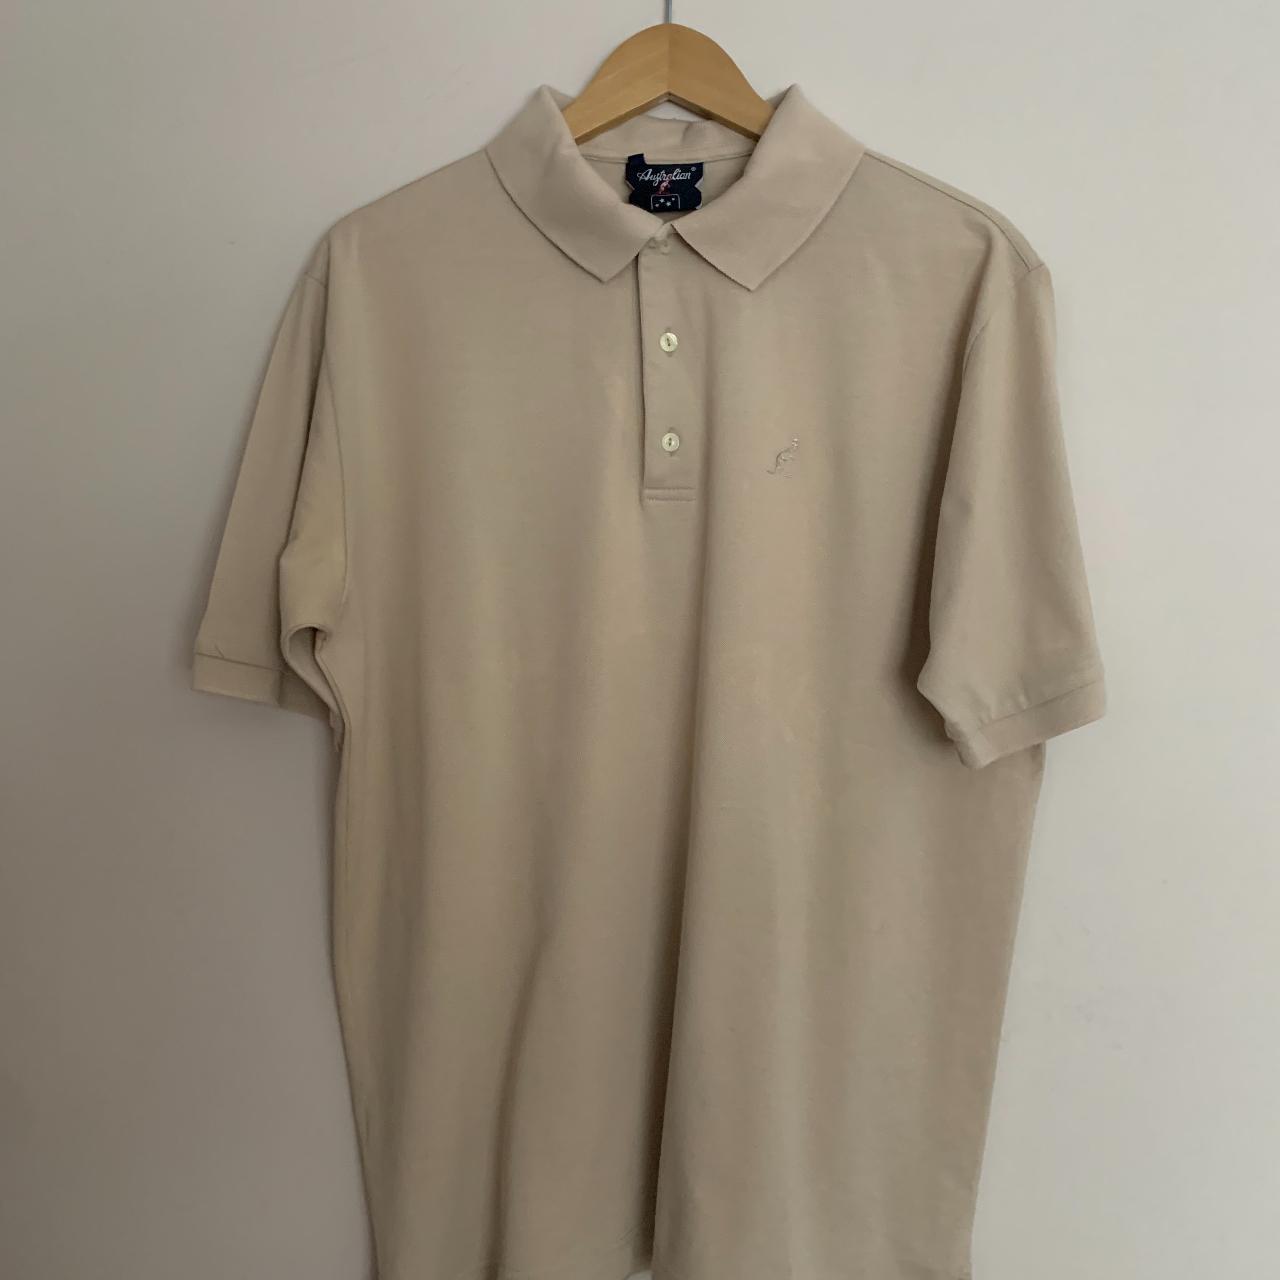 Australian Vintage Polo Shirt Beige Size 52 100%... - Depop